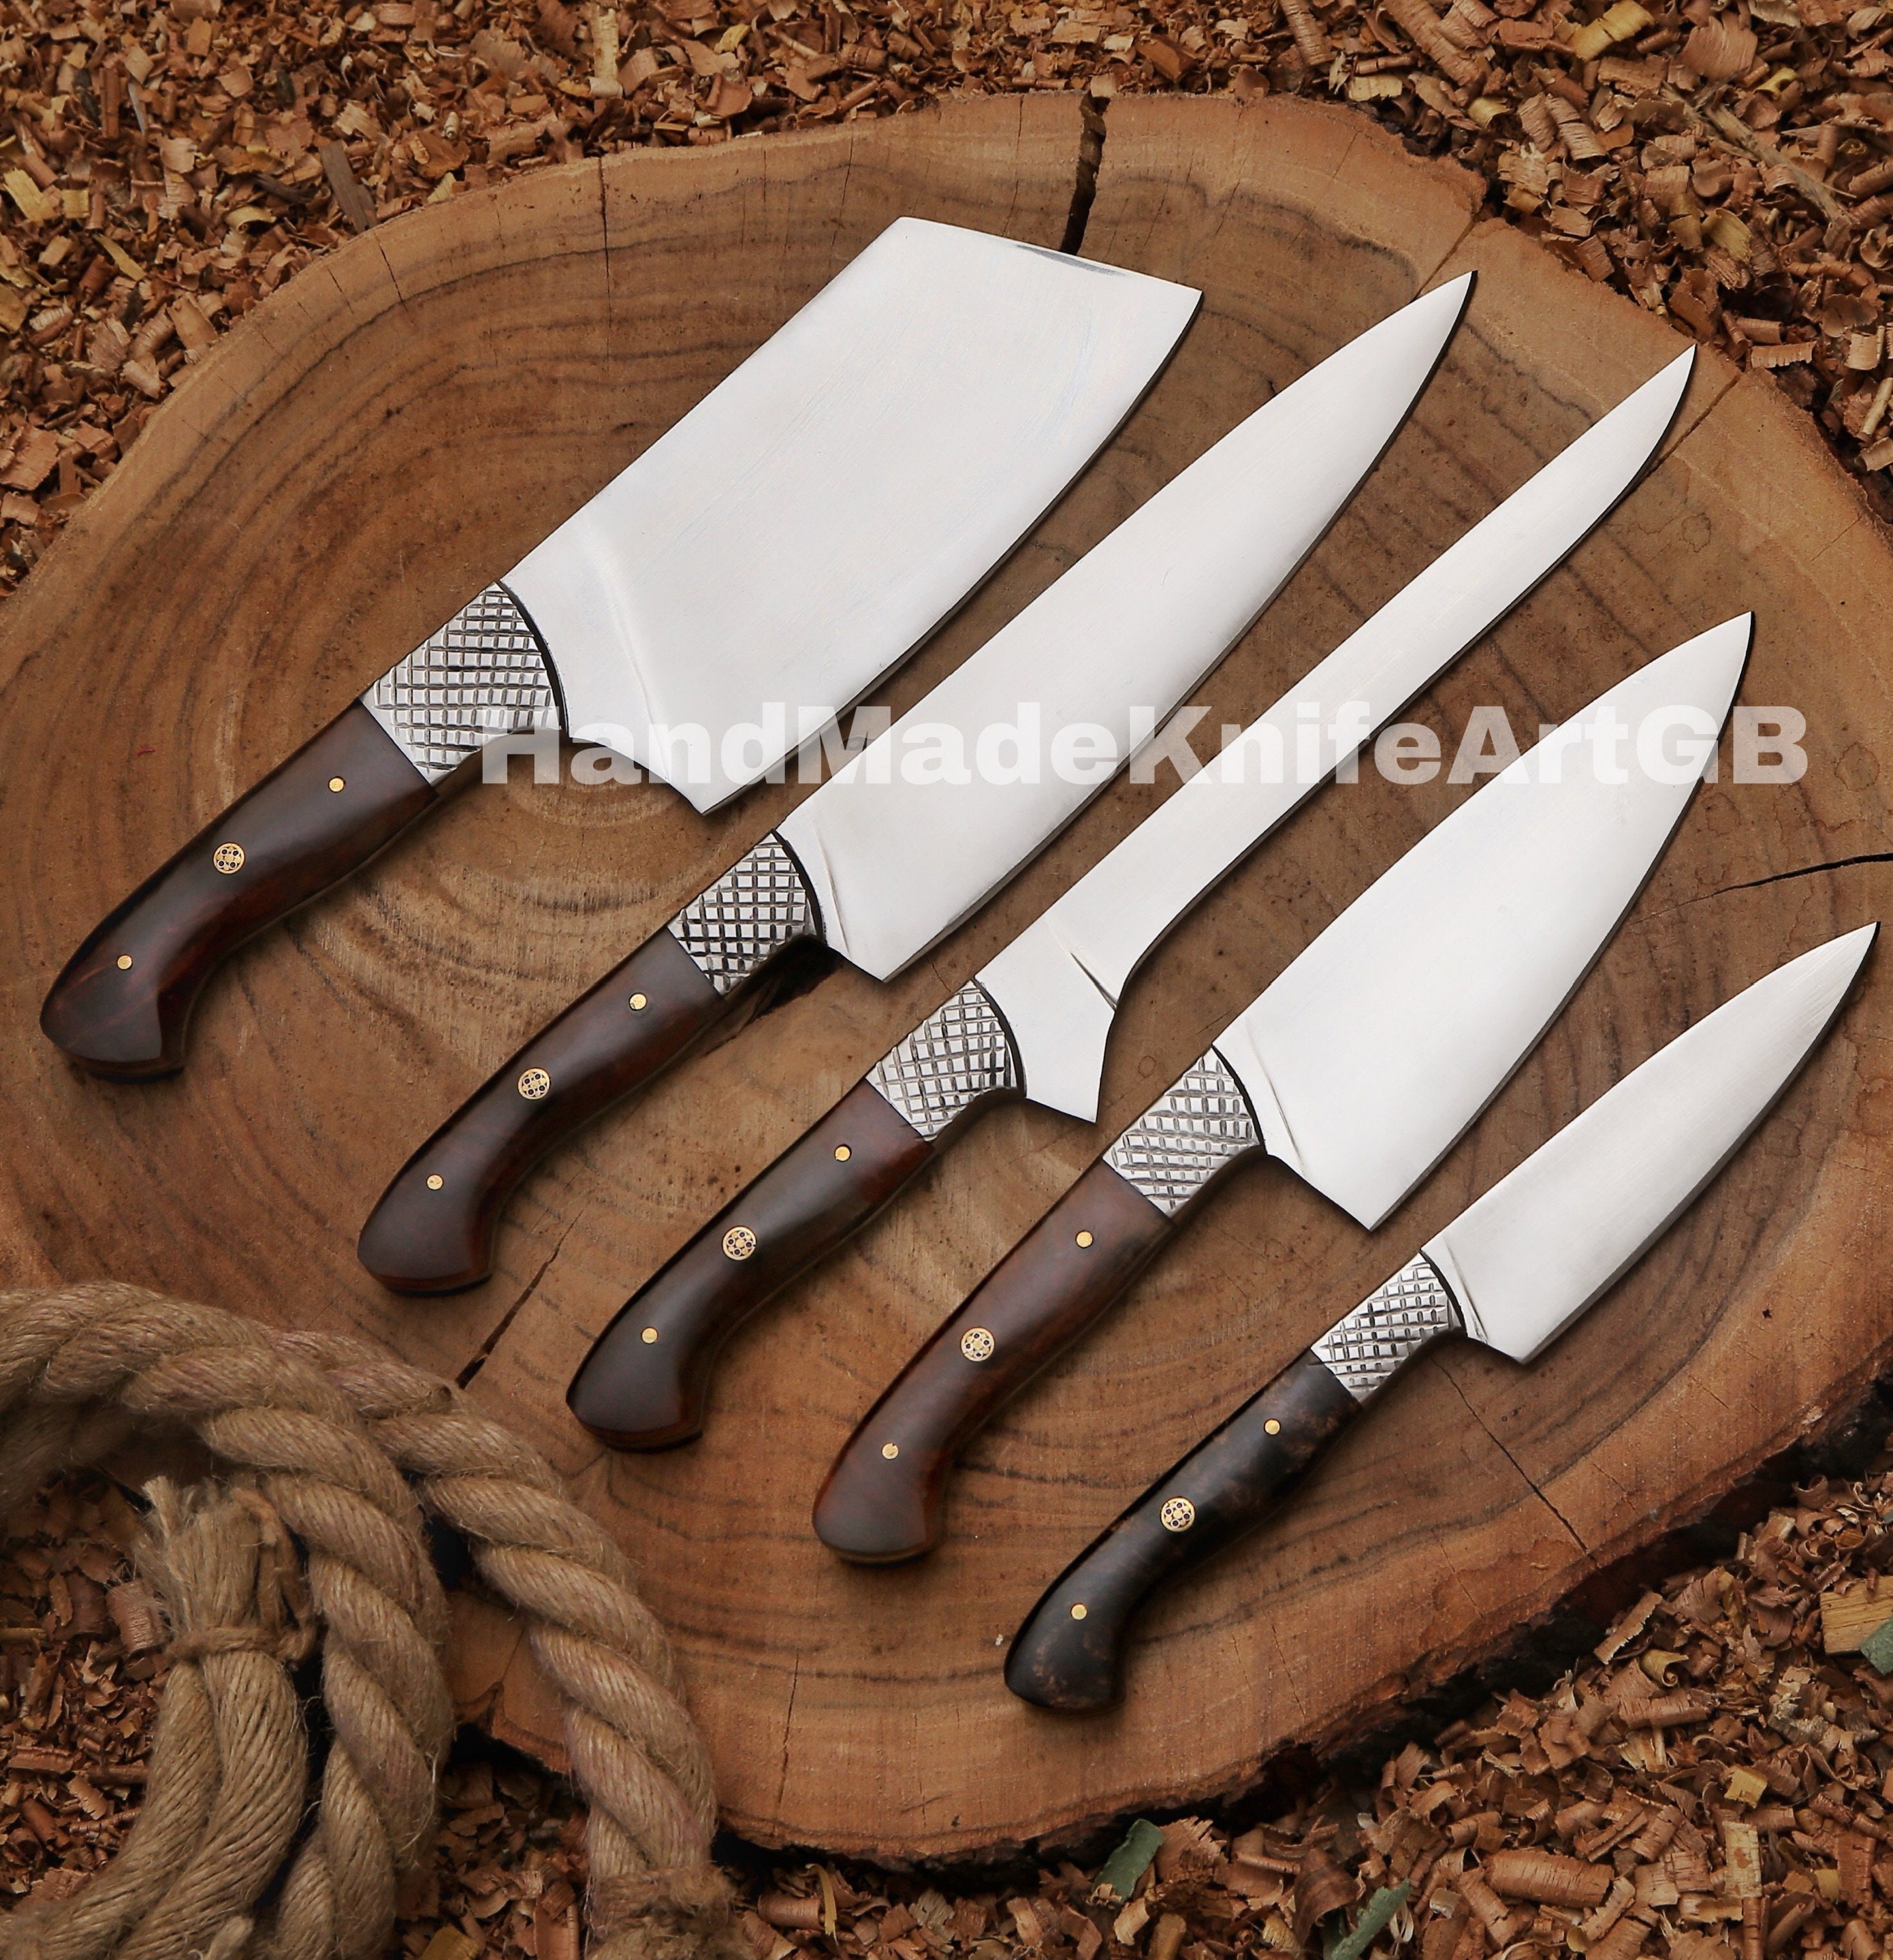  MDM KNS-003 Handmade Damascus Steel Kitchen Knife Set of 5pcs  With sheath,Chef knife set, Chef Knives set - Kitchen Gadgets Kitchen Gifts  Handmade Kitchen Gifts- Viking Kitchen Knife For Men 